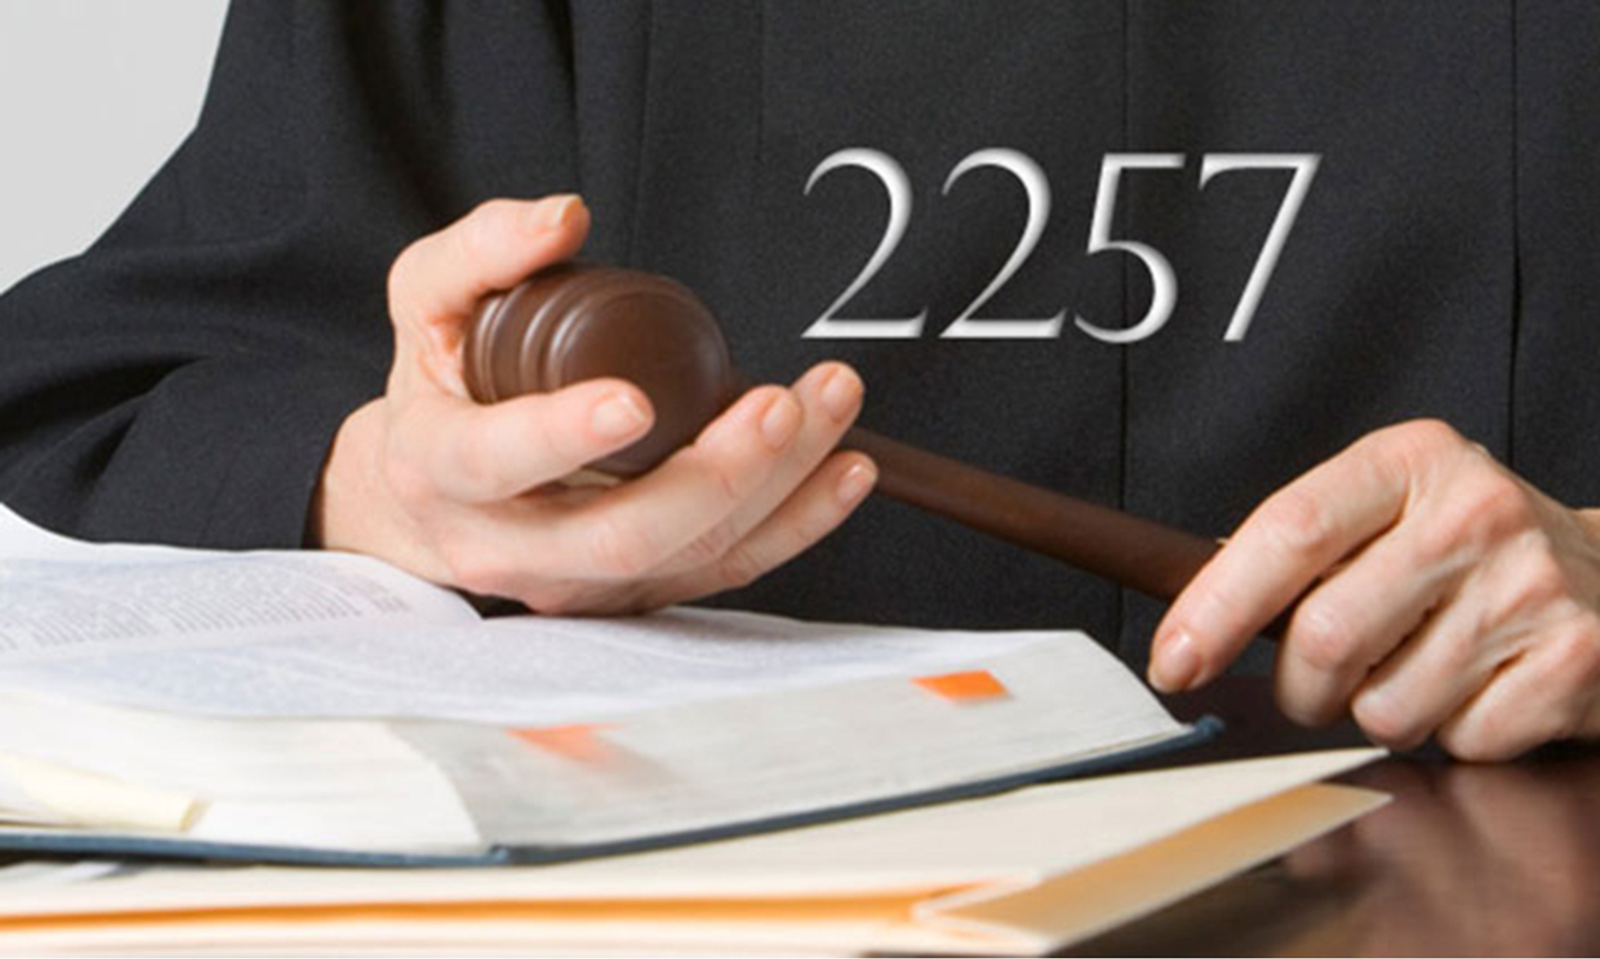 Free Speech Attorneys File Response Proof Brief in 2257 Case